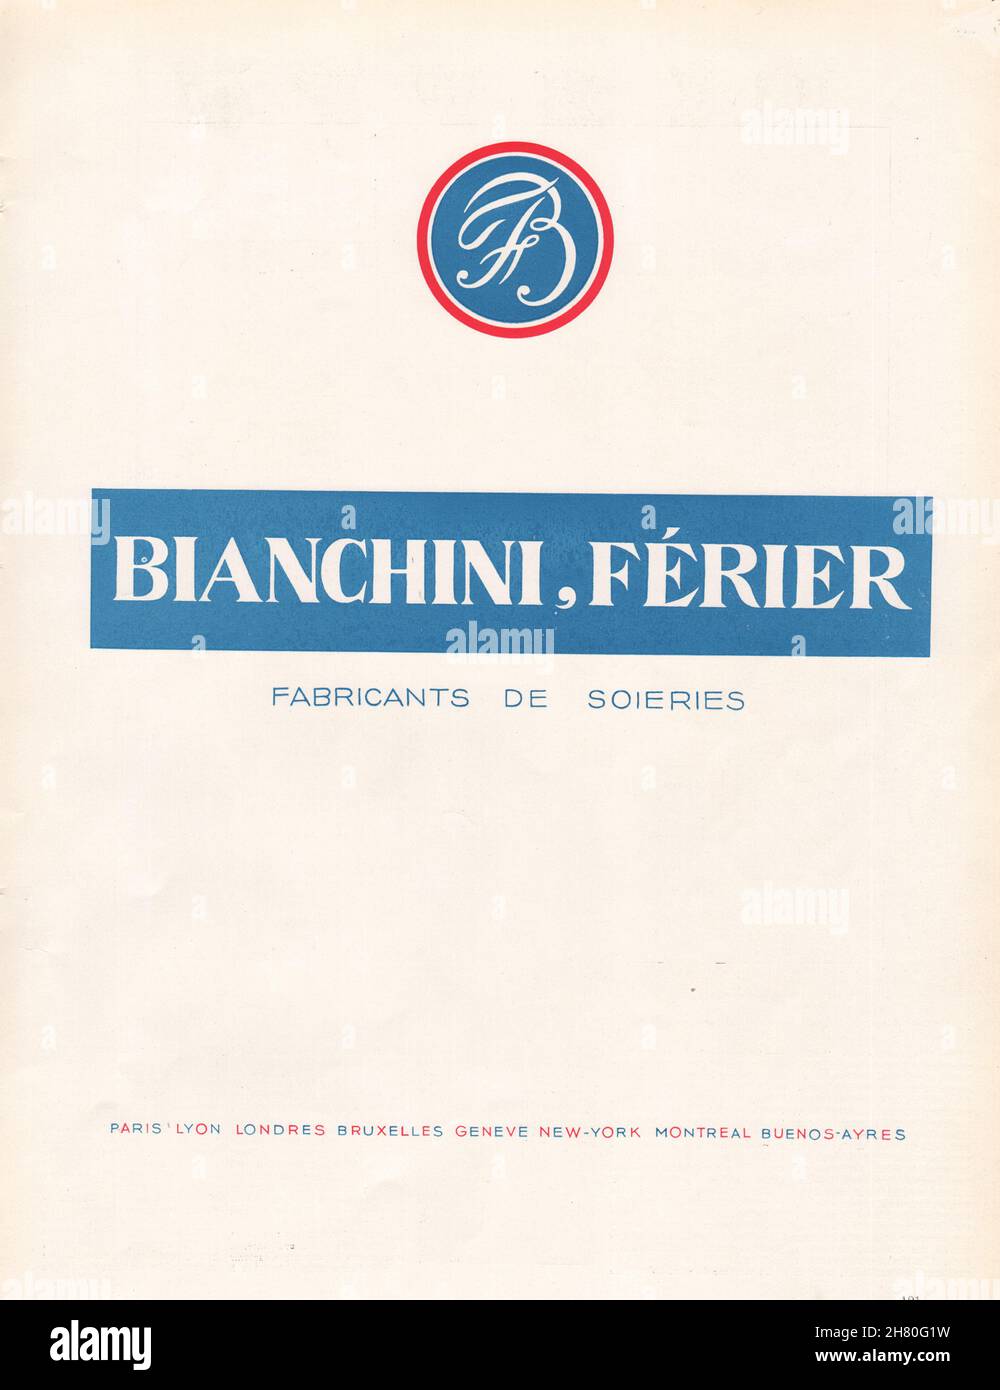 ANUNCIOS. Bianchini, Férier. Fábricas de Soieries. Seda. Estampado textil 1947 Foto de stock